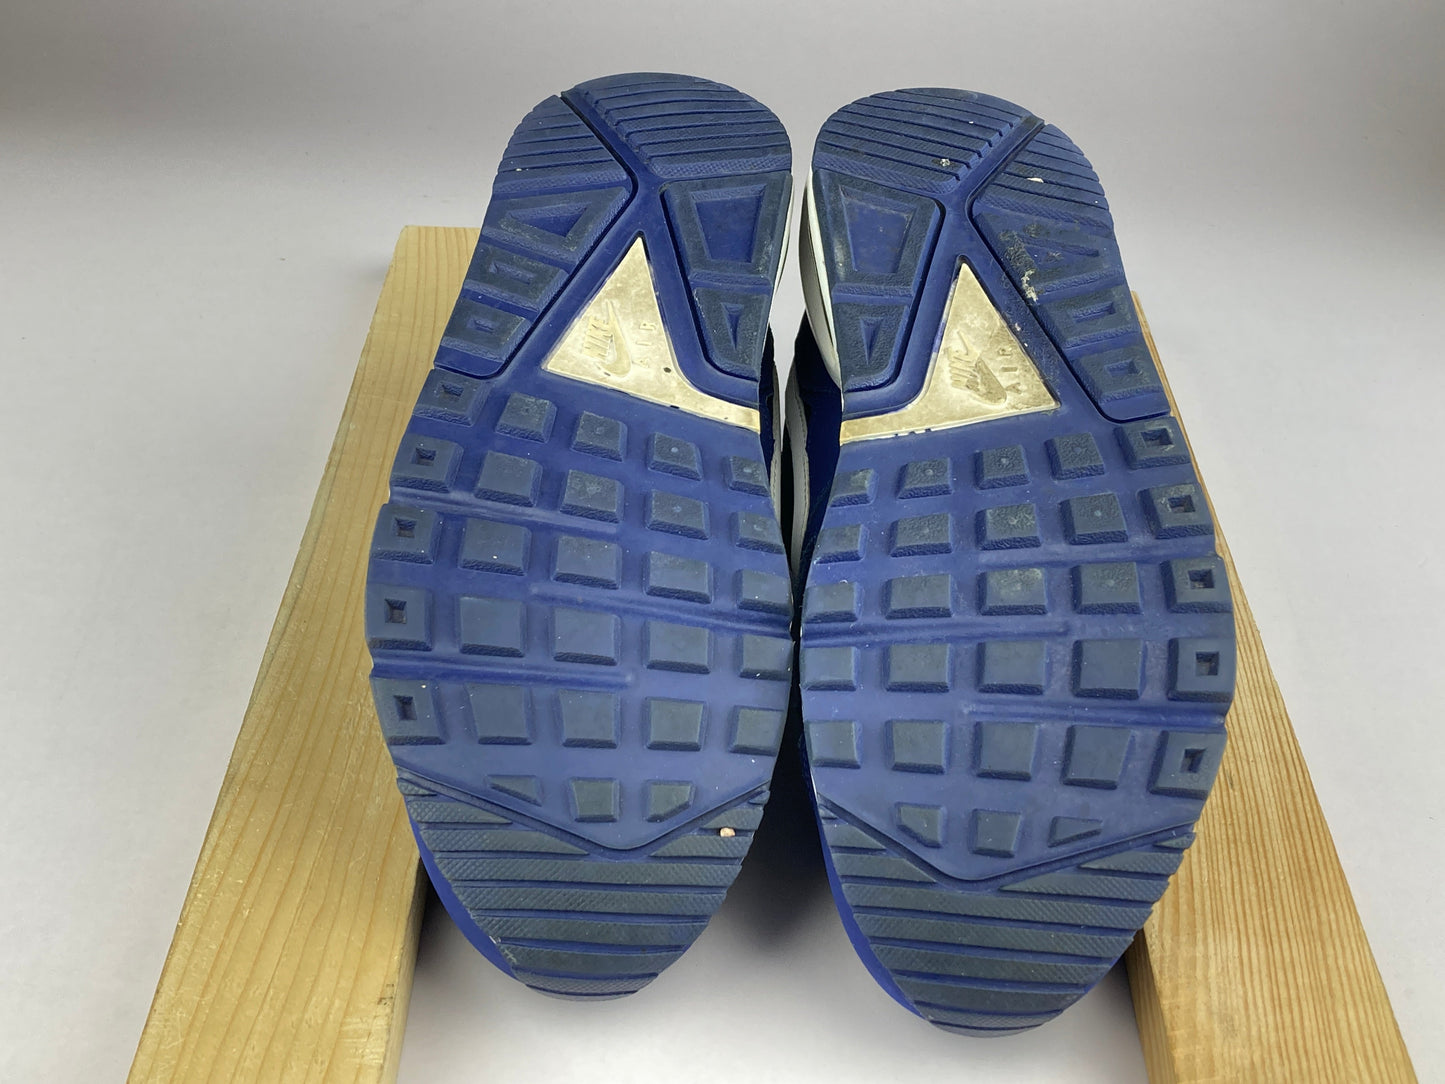 Nike Wmns Air Max IVO 'Blue Pink' 580519-416-Sneakers-Athletic Corner